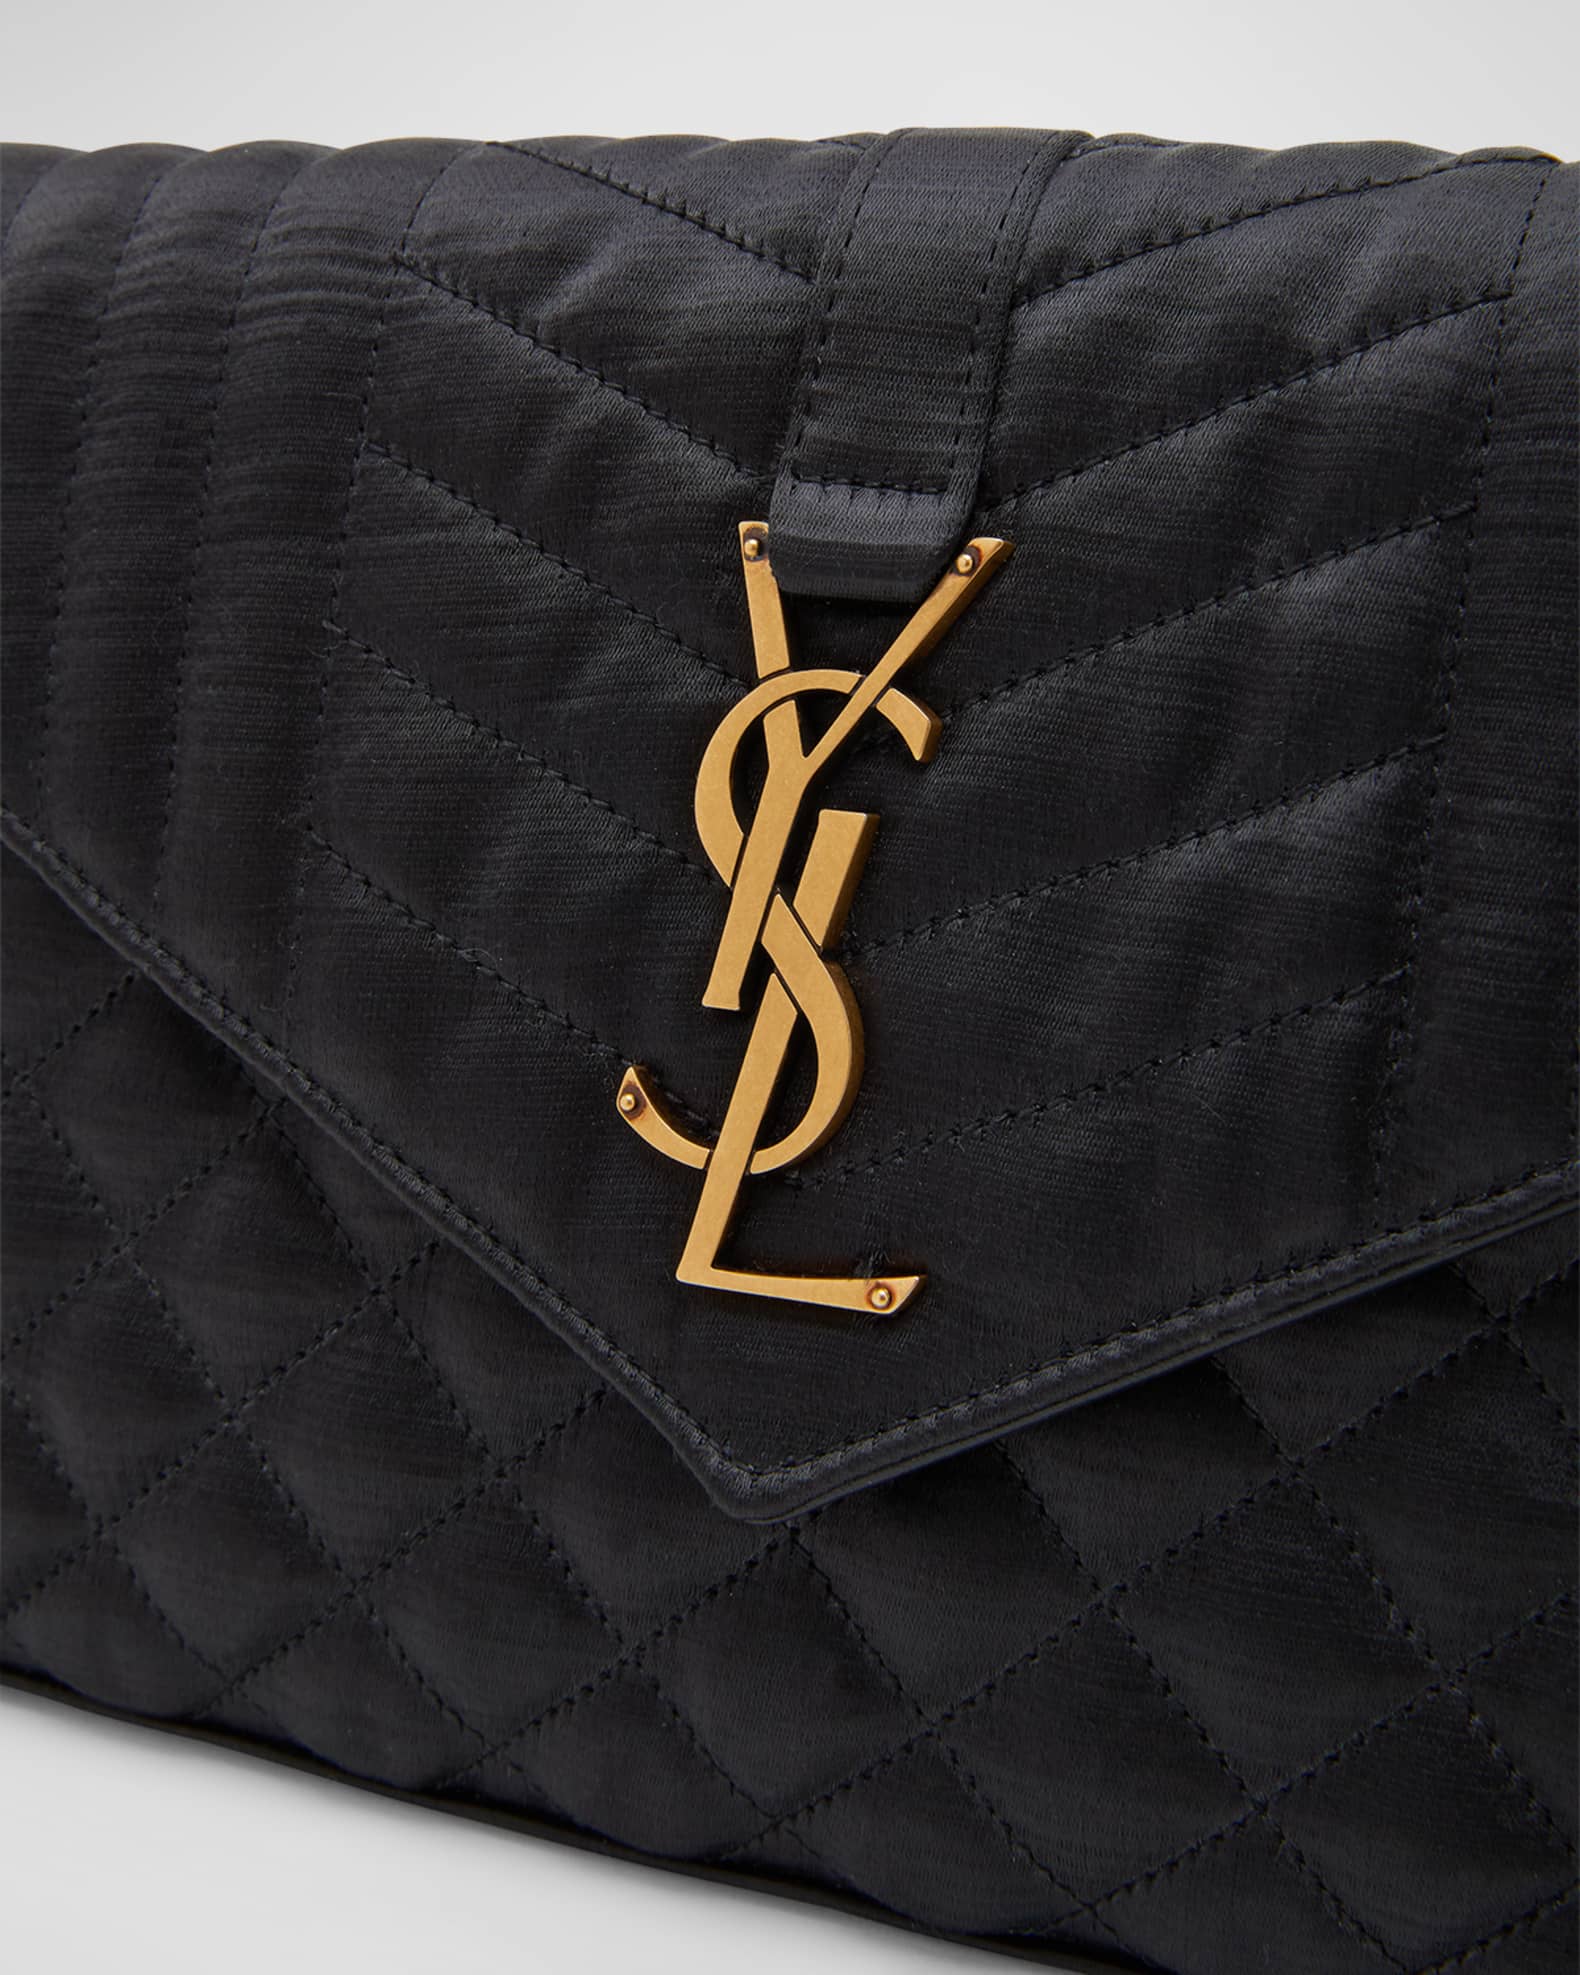 Saint Laurent Tricolor Ysl Monogram Nappa Leather Wallet on Chain